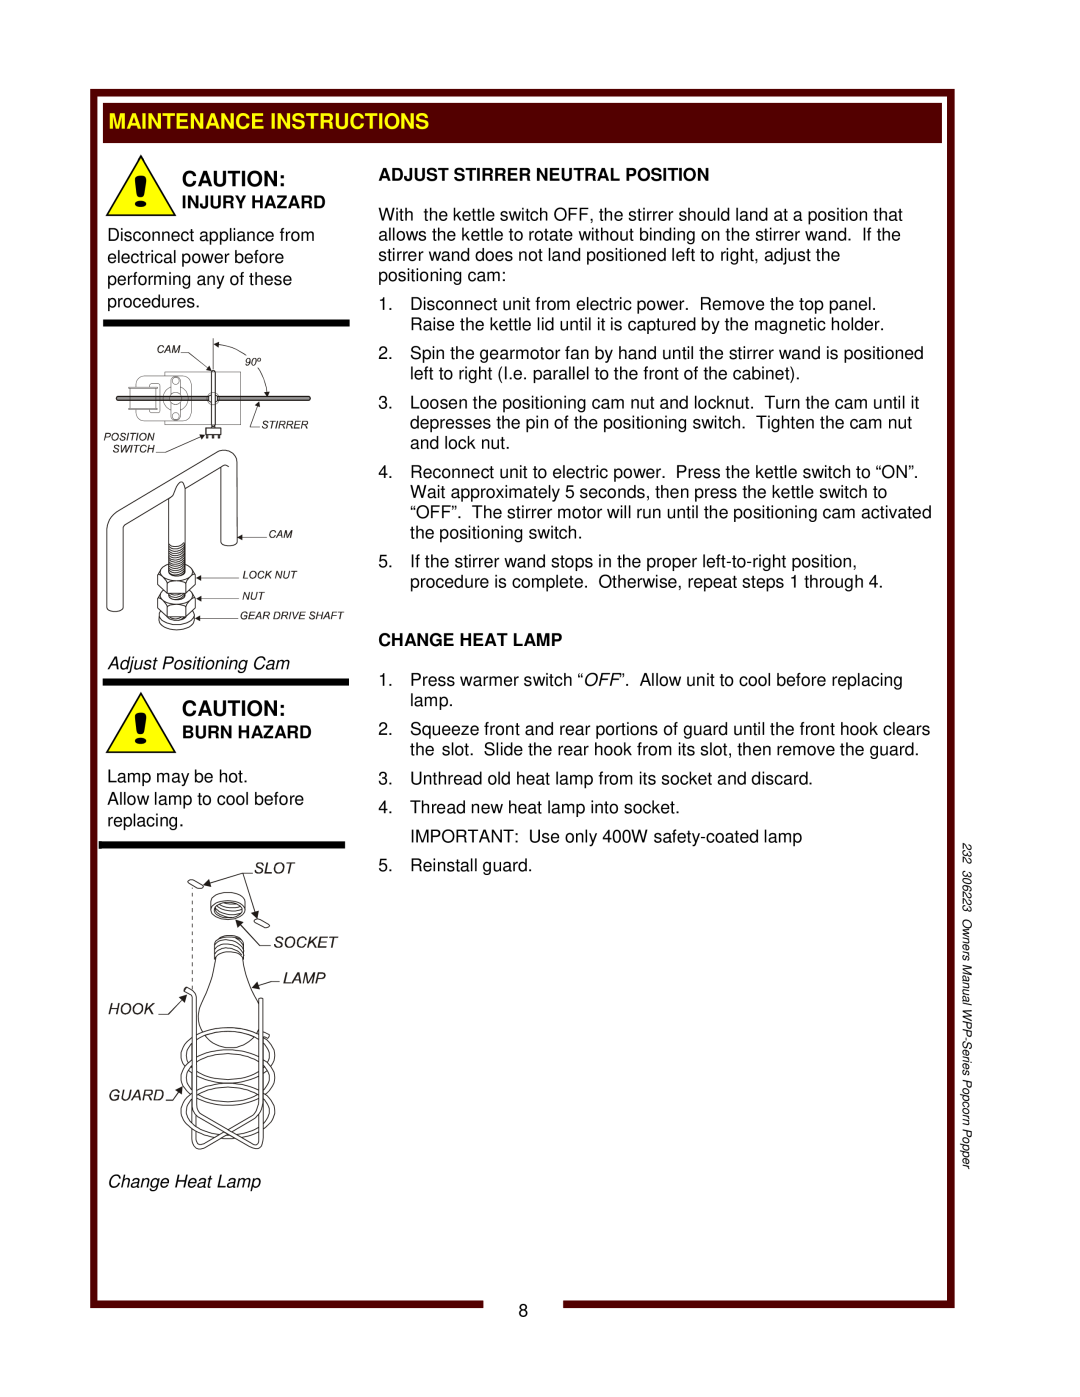 Wells WPP-6, WPP-10 Maintenance Instructions, Injury Hazard, Adjust Positioning Cam, Burn Hazard, Change Heat Lamp 